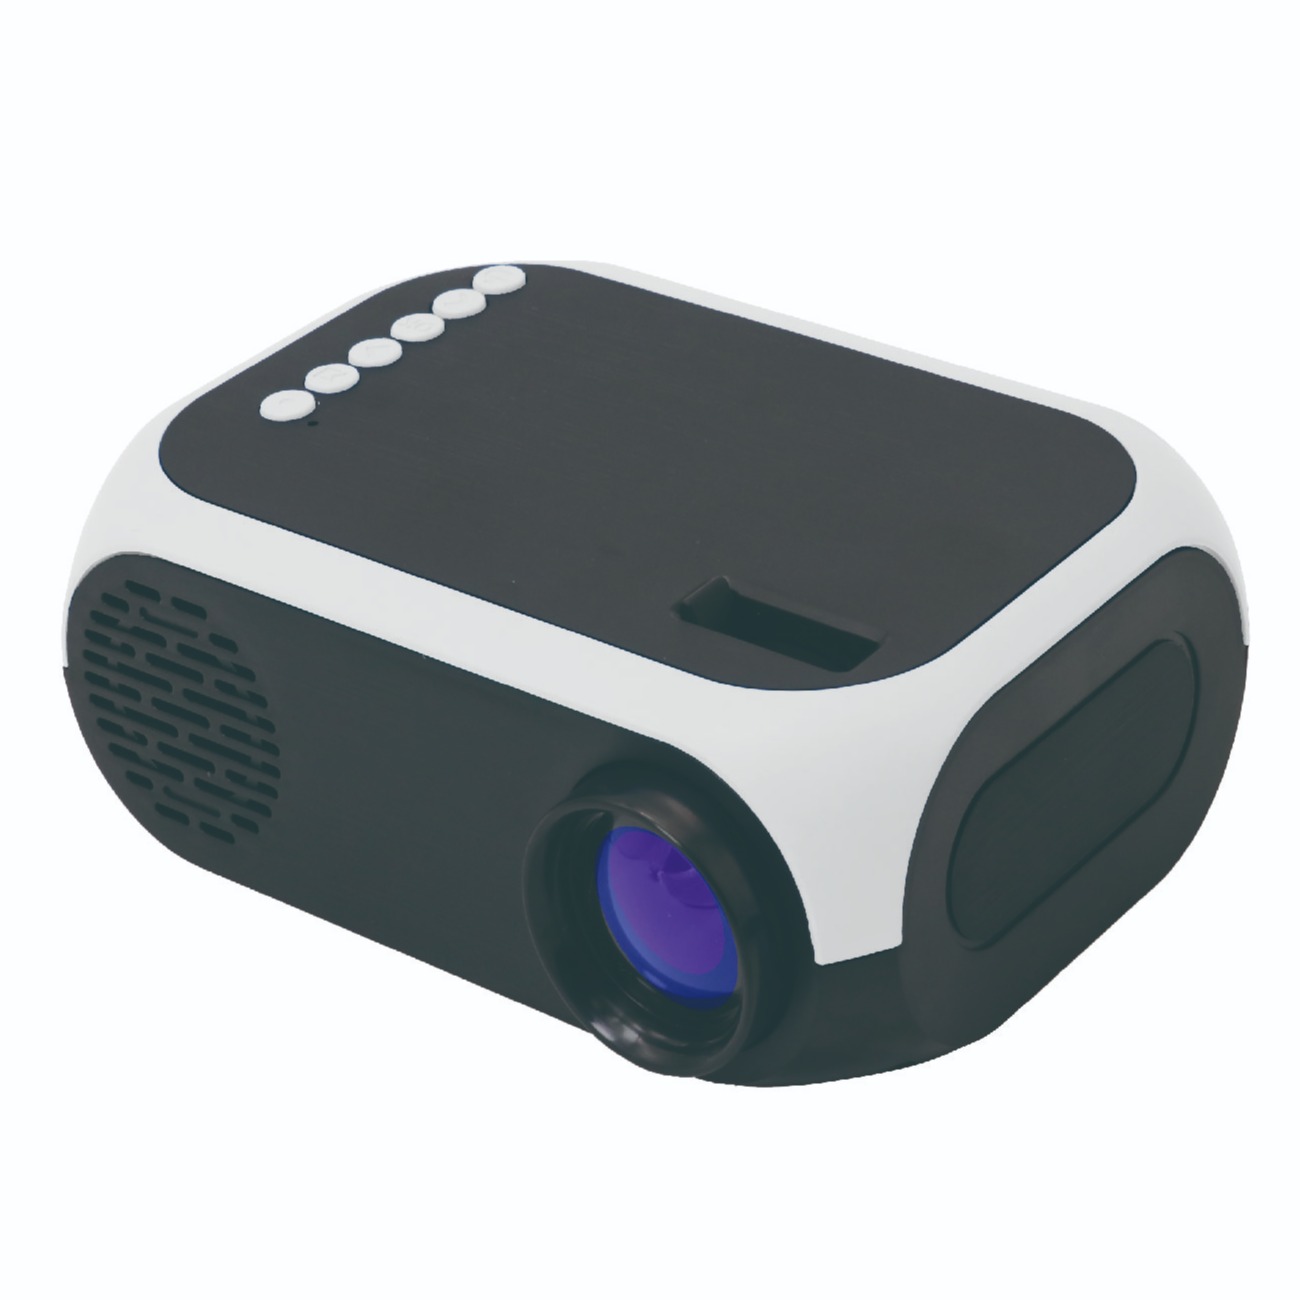 LED Porjector mini สมาร์ทโปรเจคเตอร์ mini projector รุ่น BLJ-111 มินิโปรเจคเตอร์ โปรเจคเตอร์ขนาดพกพา สมาร์ทโปรเจคเตอร์ โปรเจคเตอร์ฉายหนัง